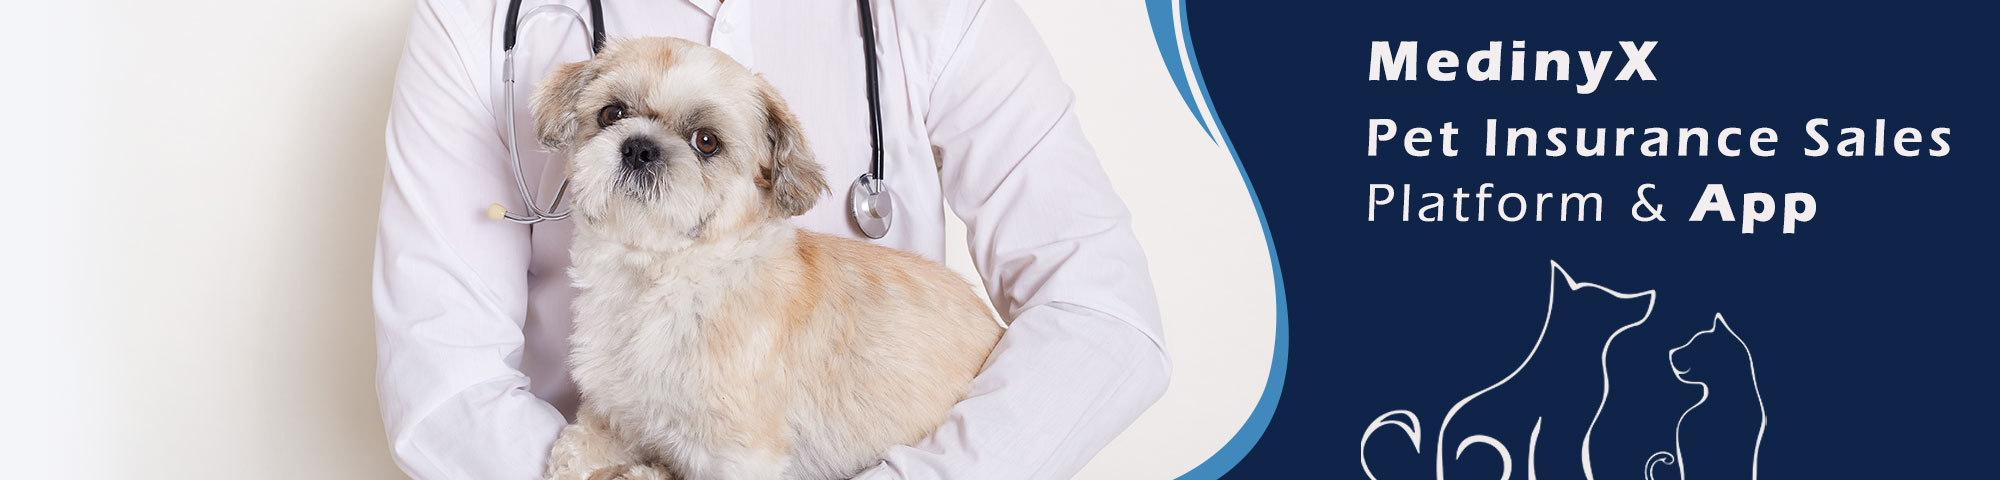 MedinyX Pet Insurance